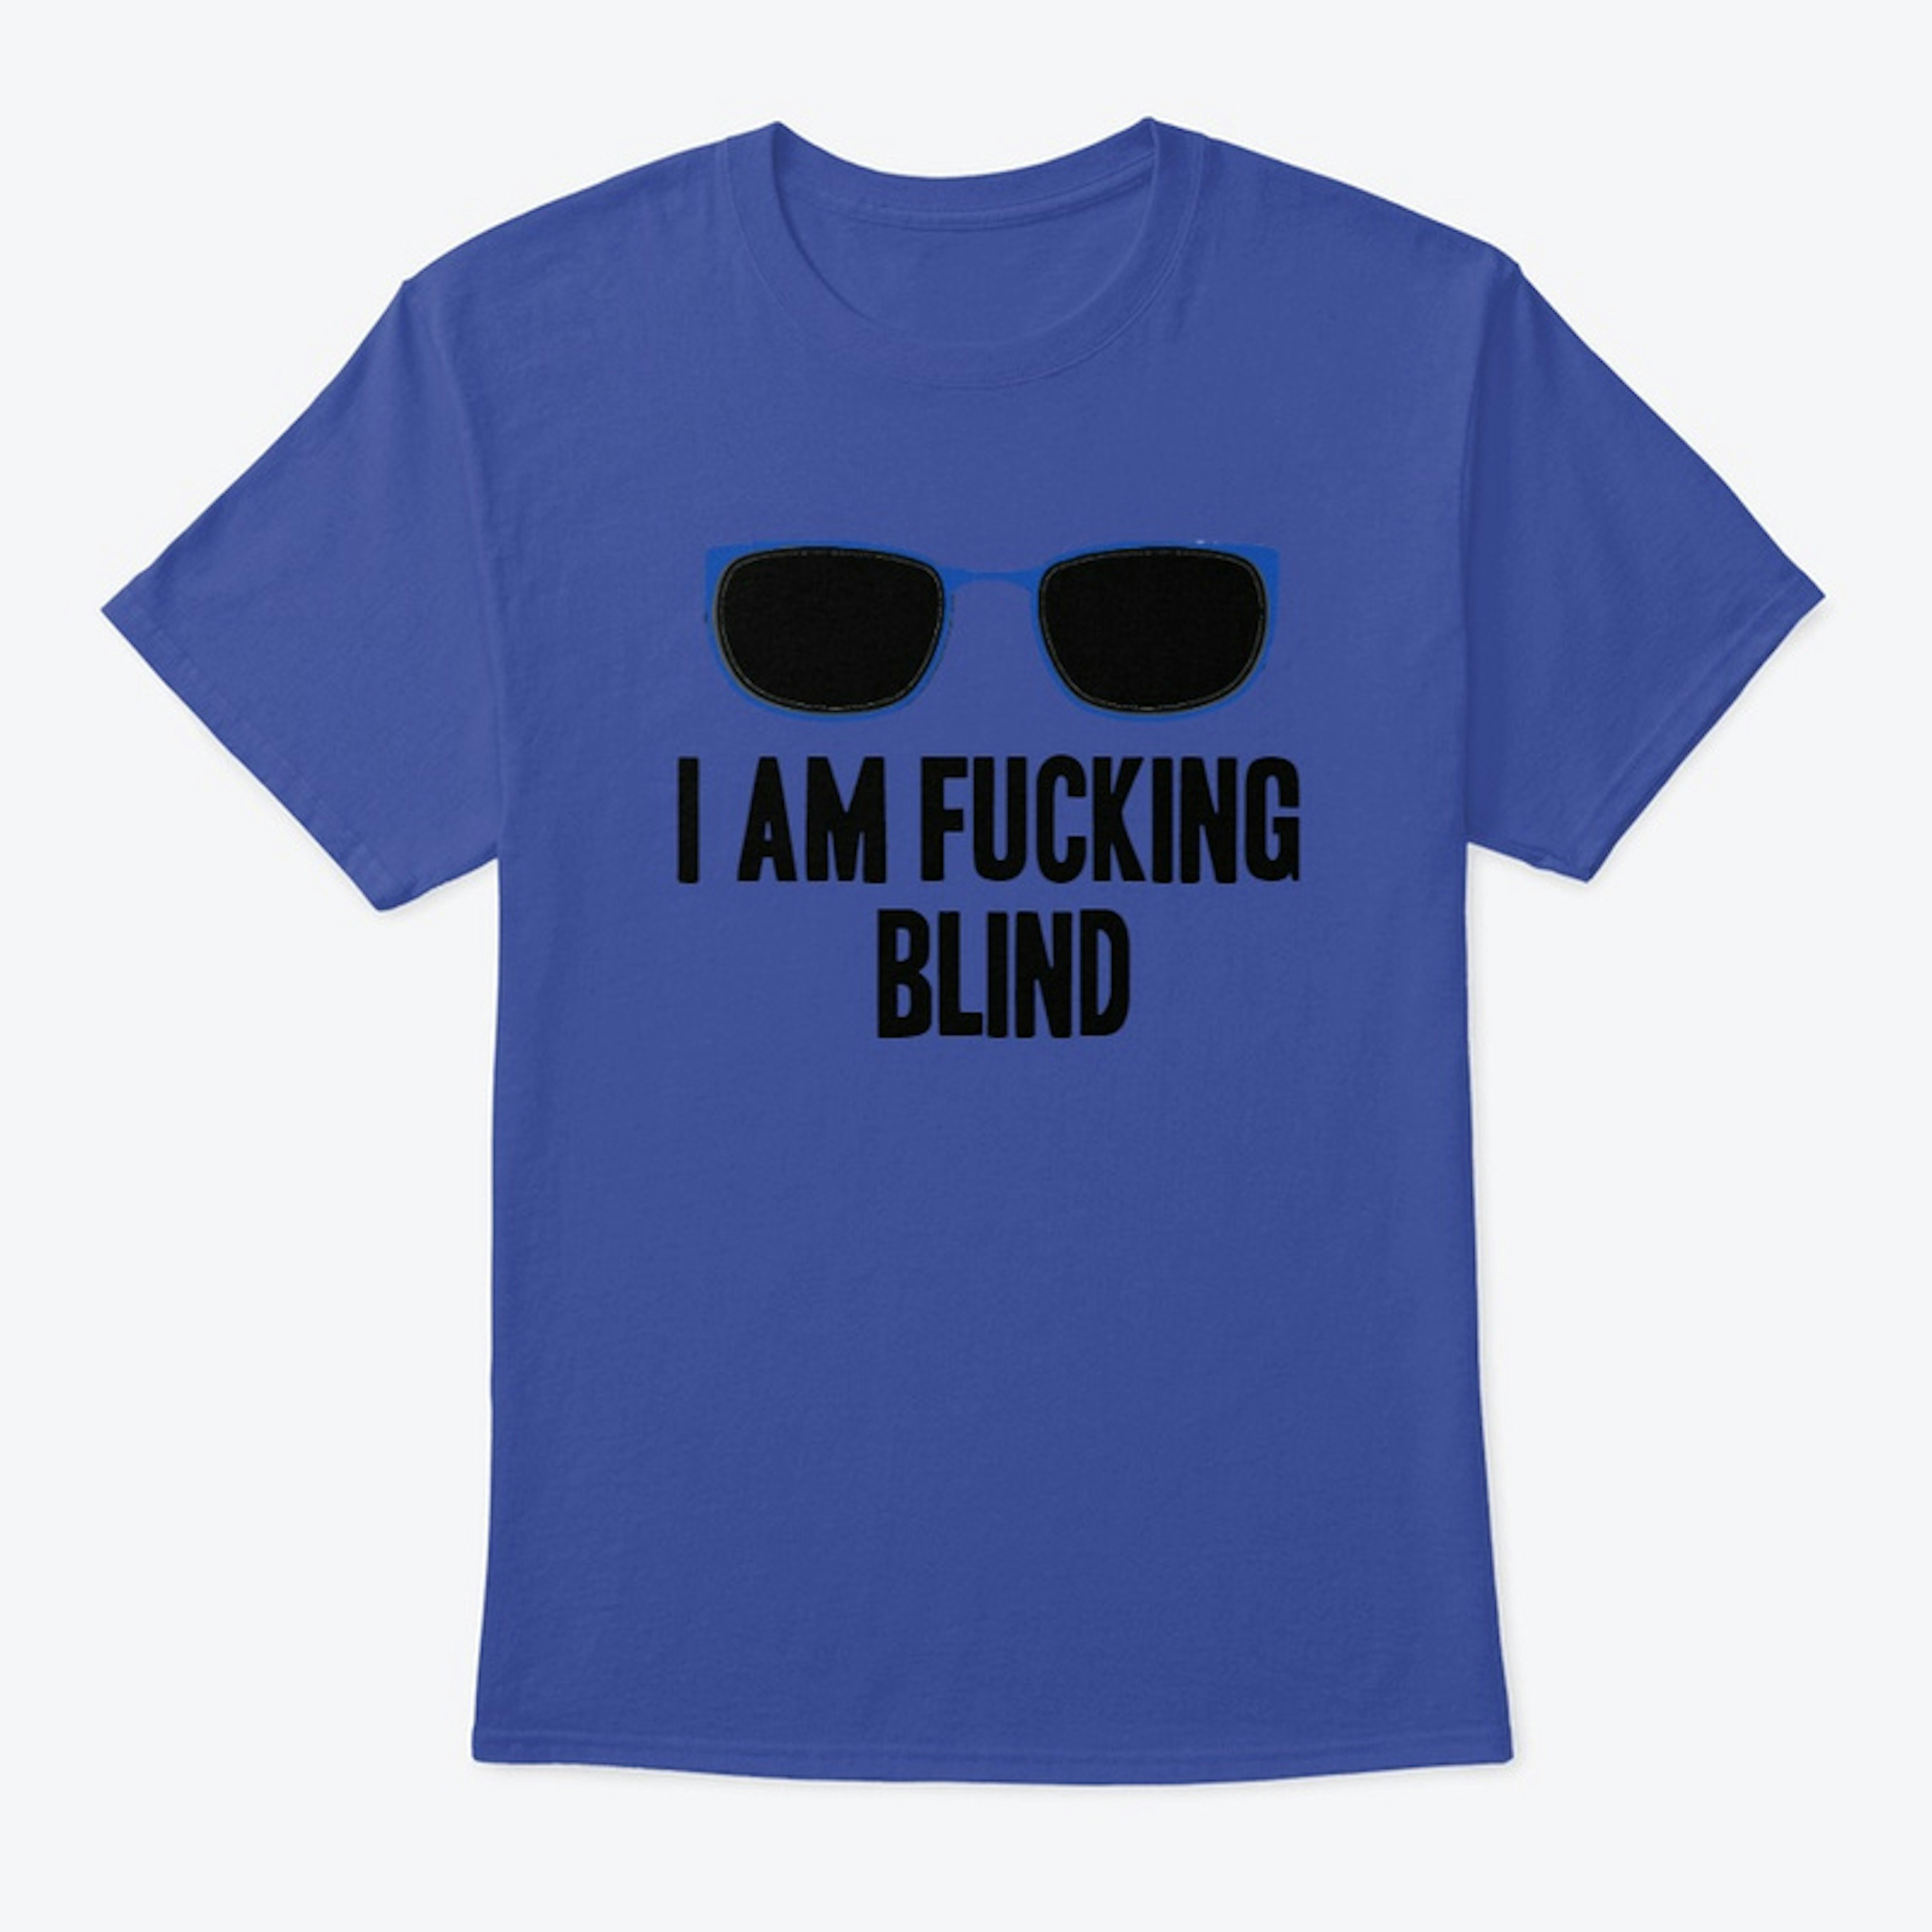 I AM F**KING BLIND